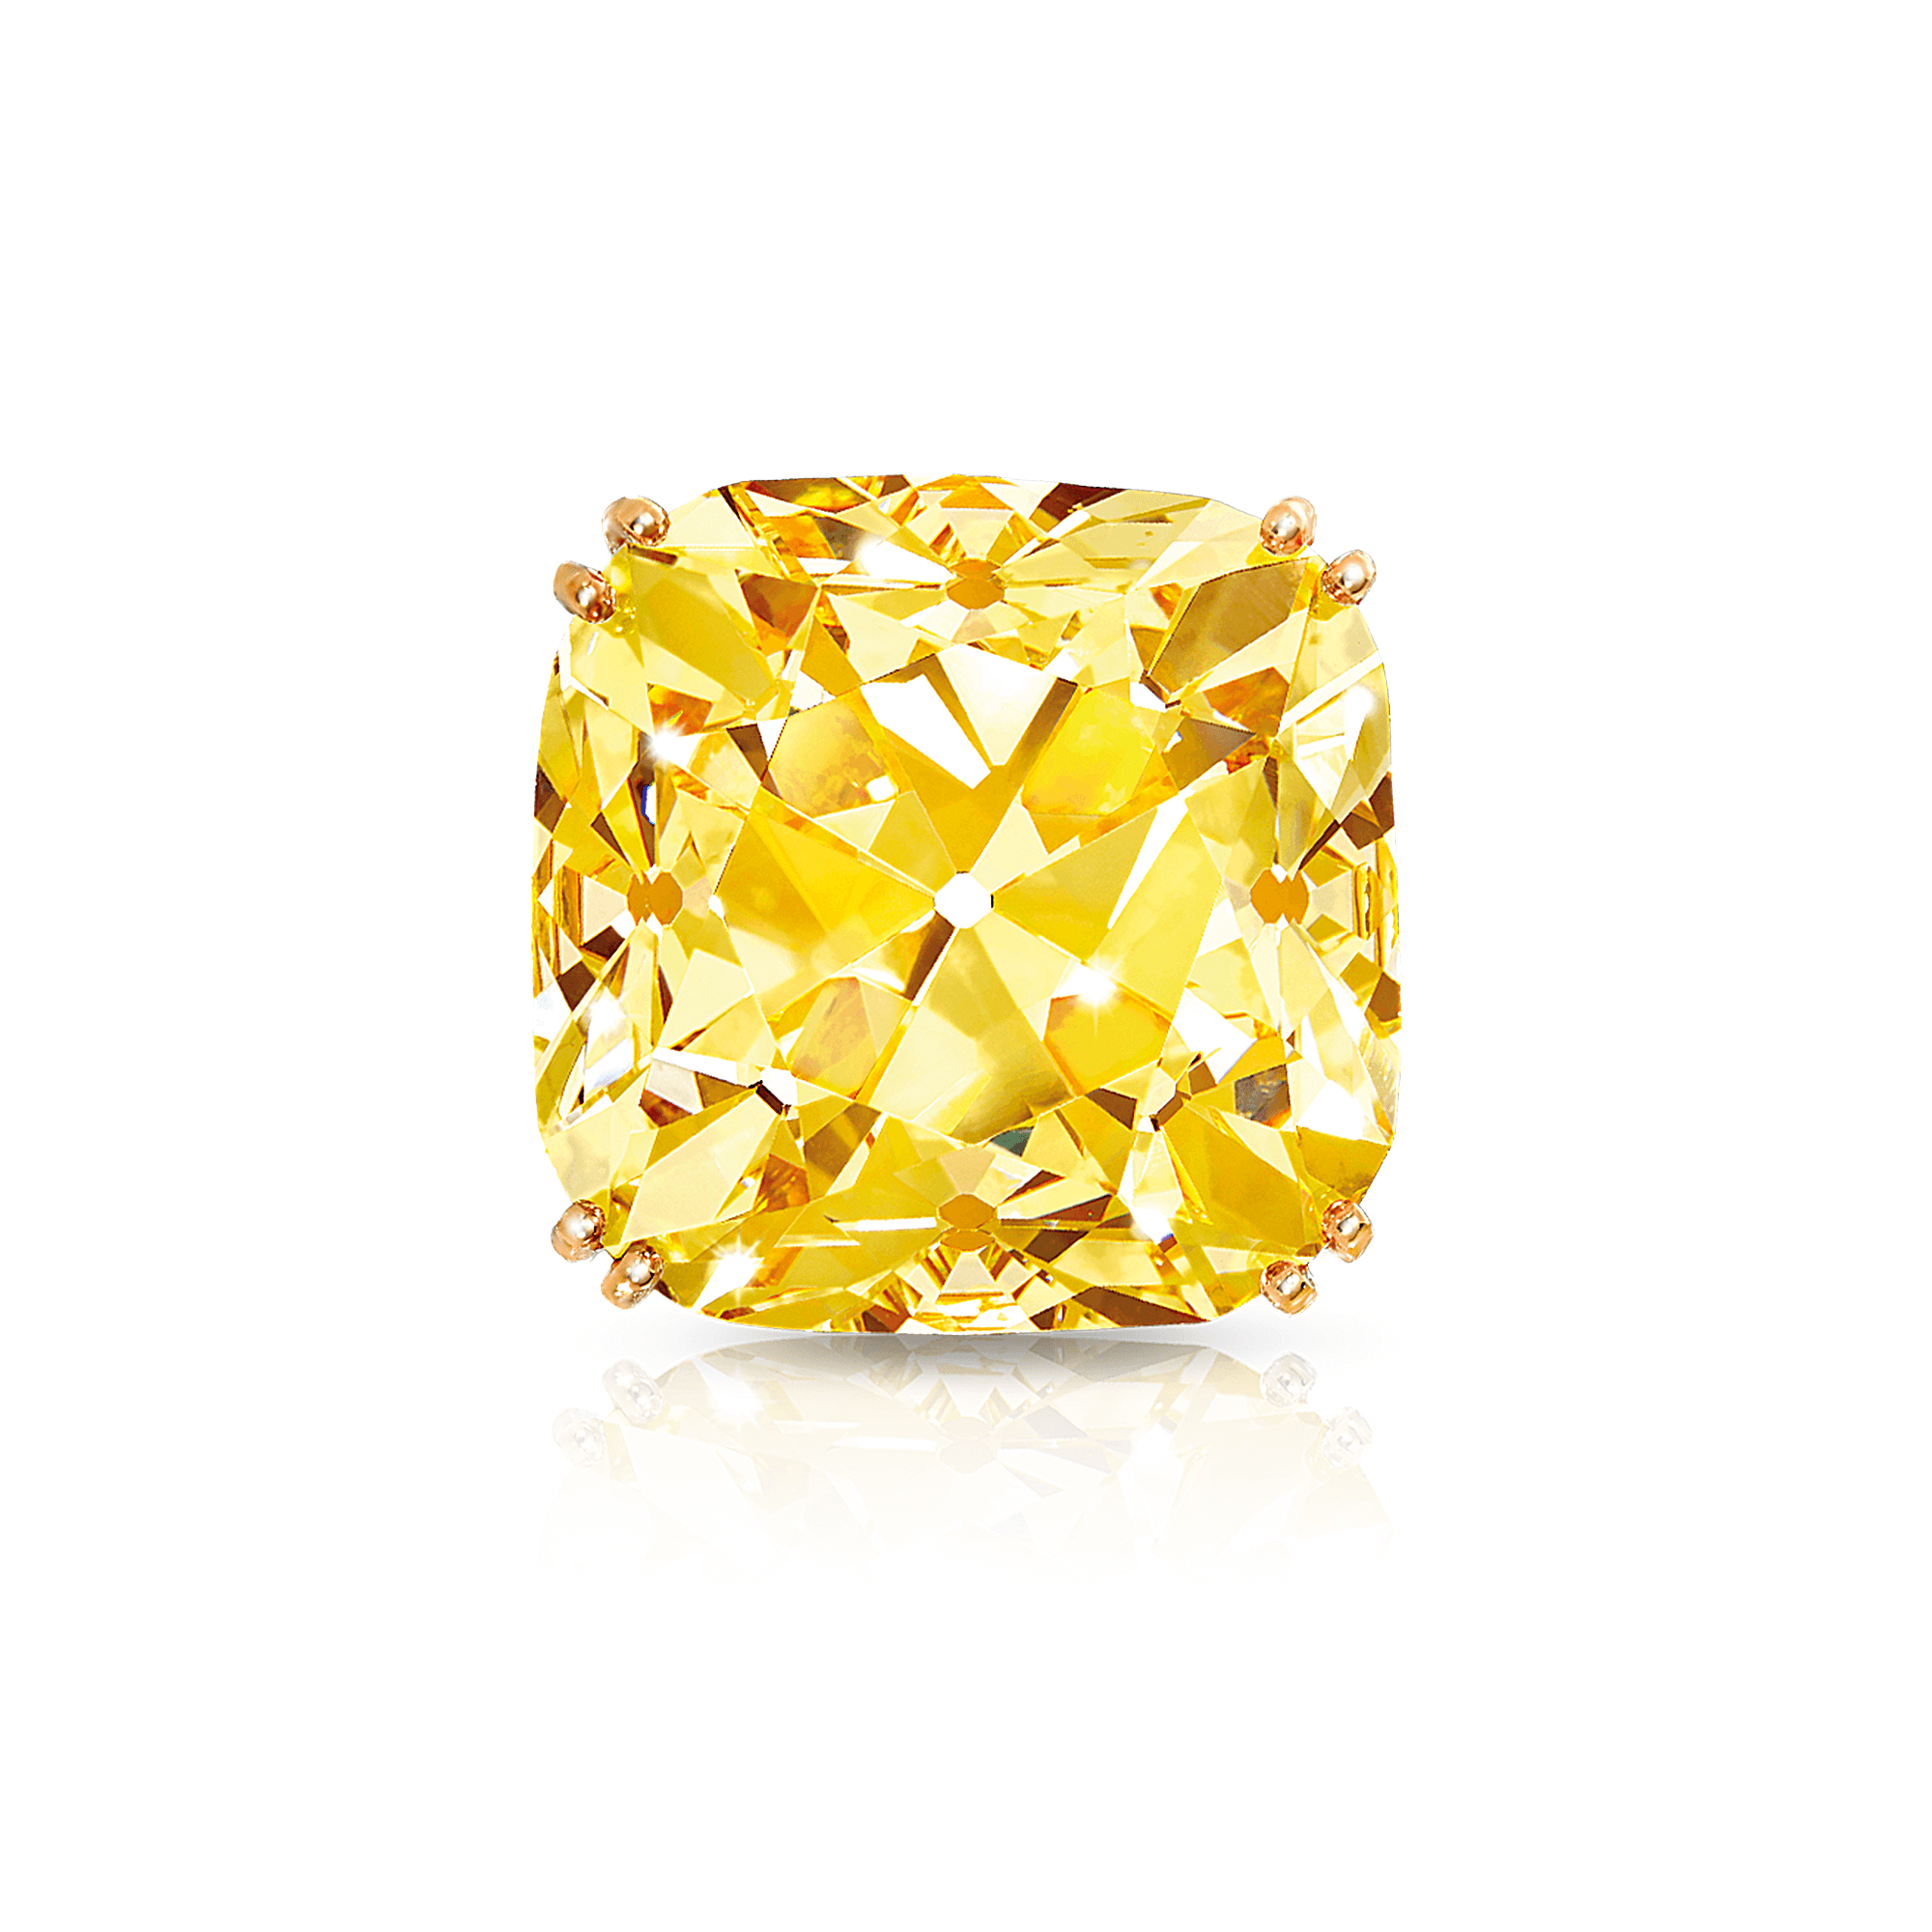 The Graff Sunflower, a 107.46 carat Fancy Yellow diamond